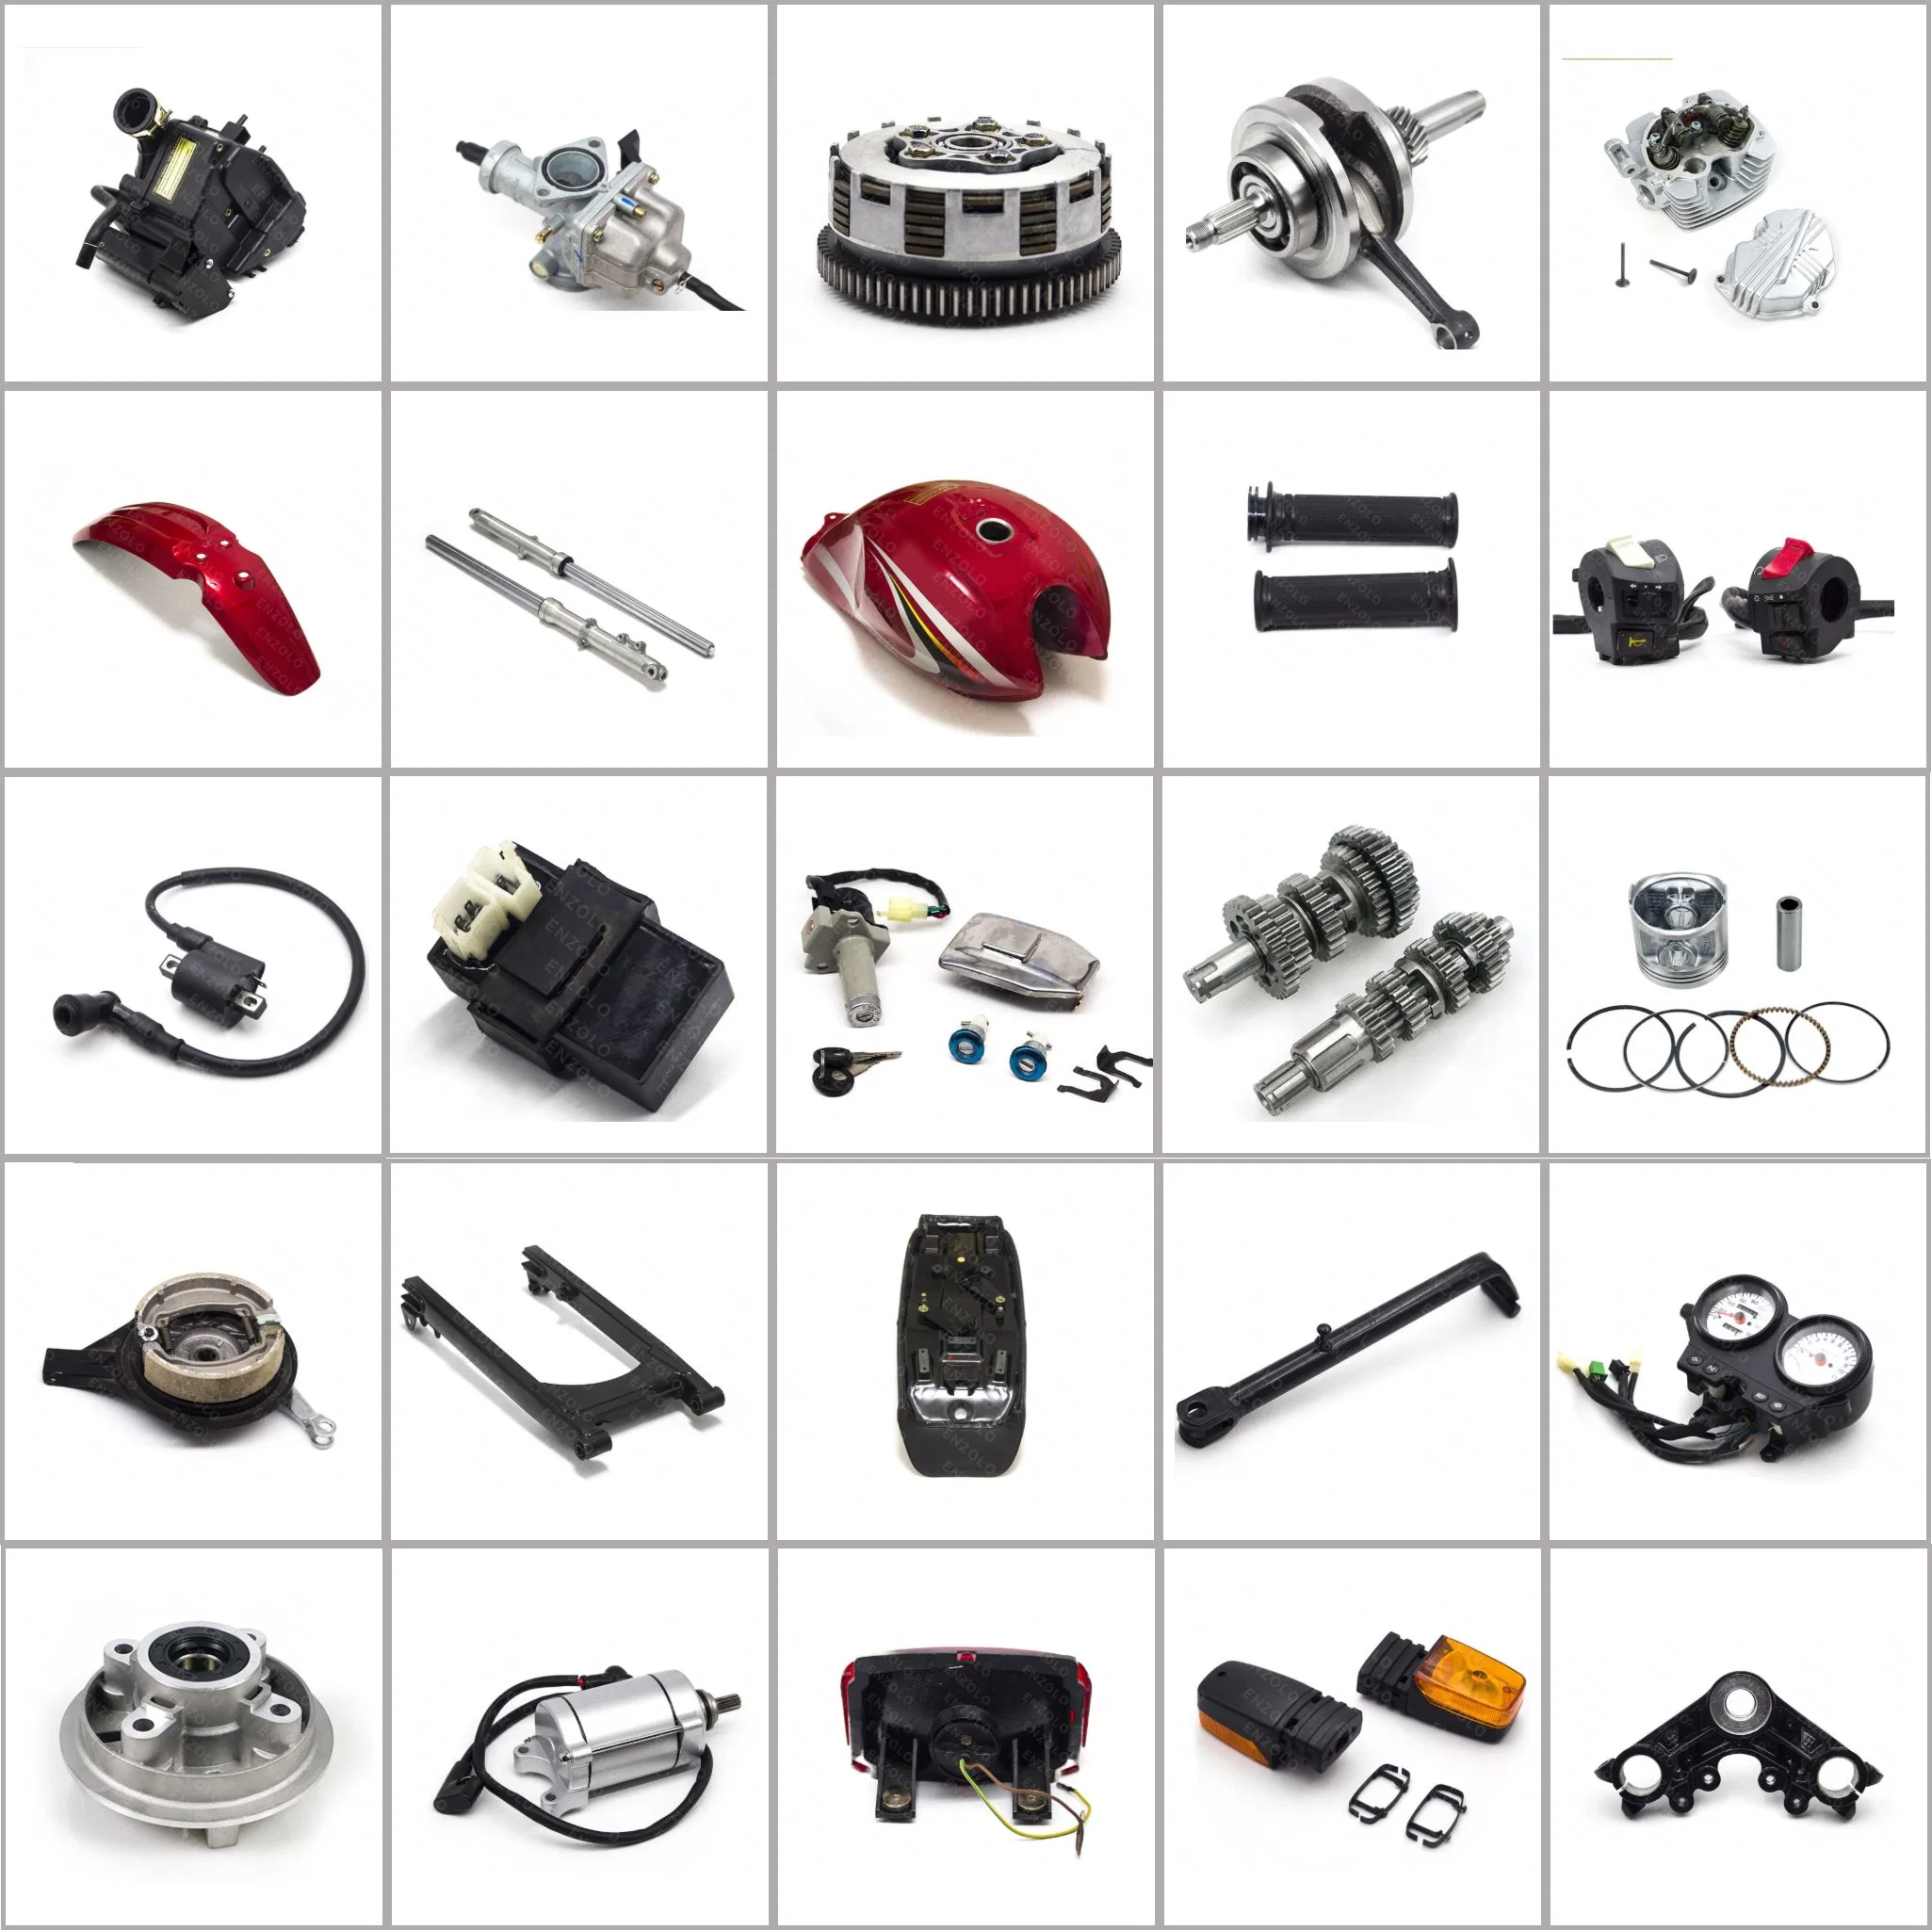 Motorcycle Parts of Braking/Electrical/Engine and Transmission/Body/Handling and Suspension/Lighting Parts for Honda/YAMAHA/Suzuki/Tvs/Zongshen/Haojue/Dayun